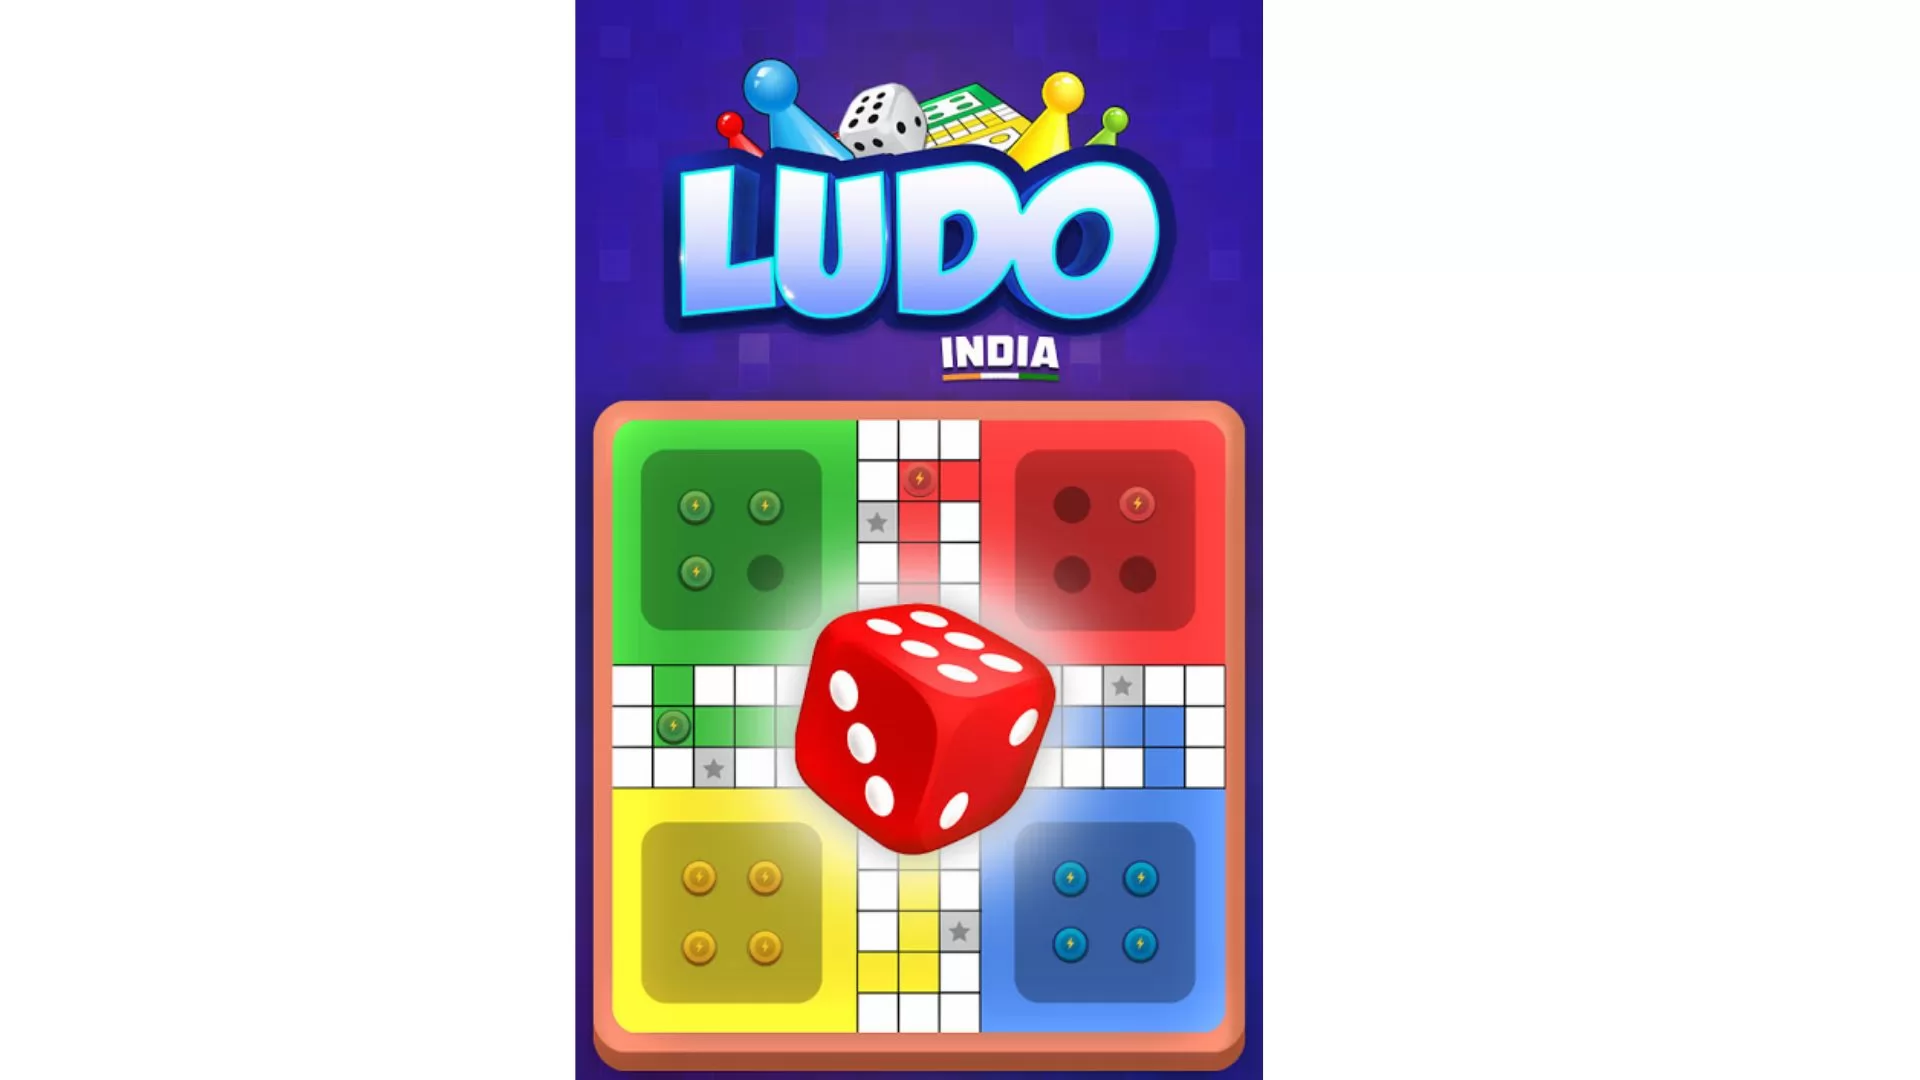 Ludo Game Paytm Cash - Top, Best University in Jaipur, Rajasthan